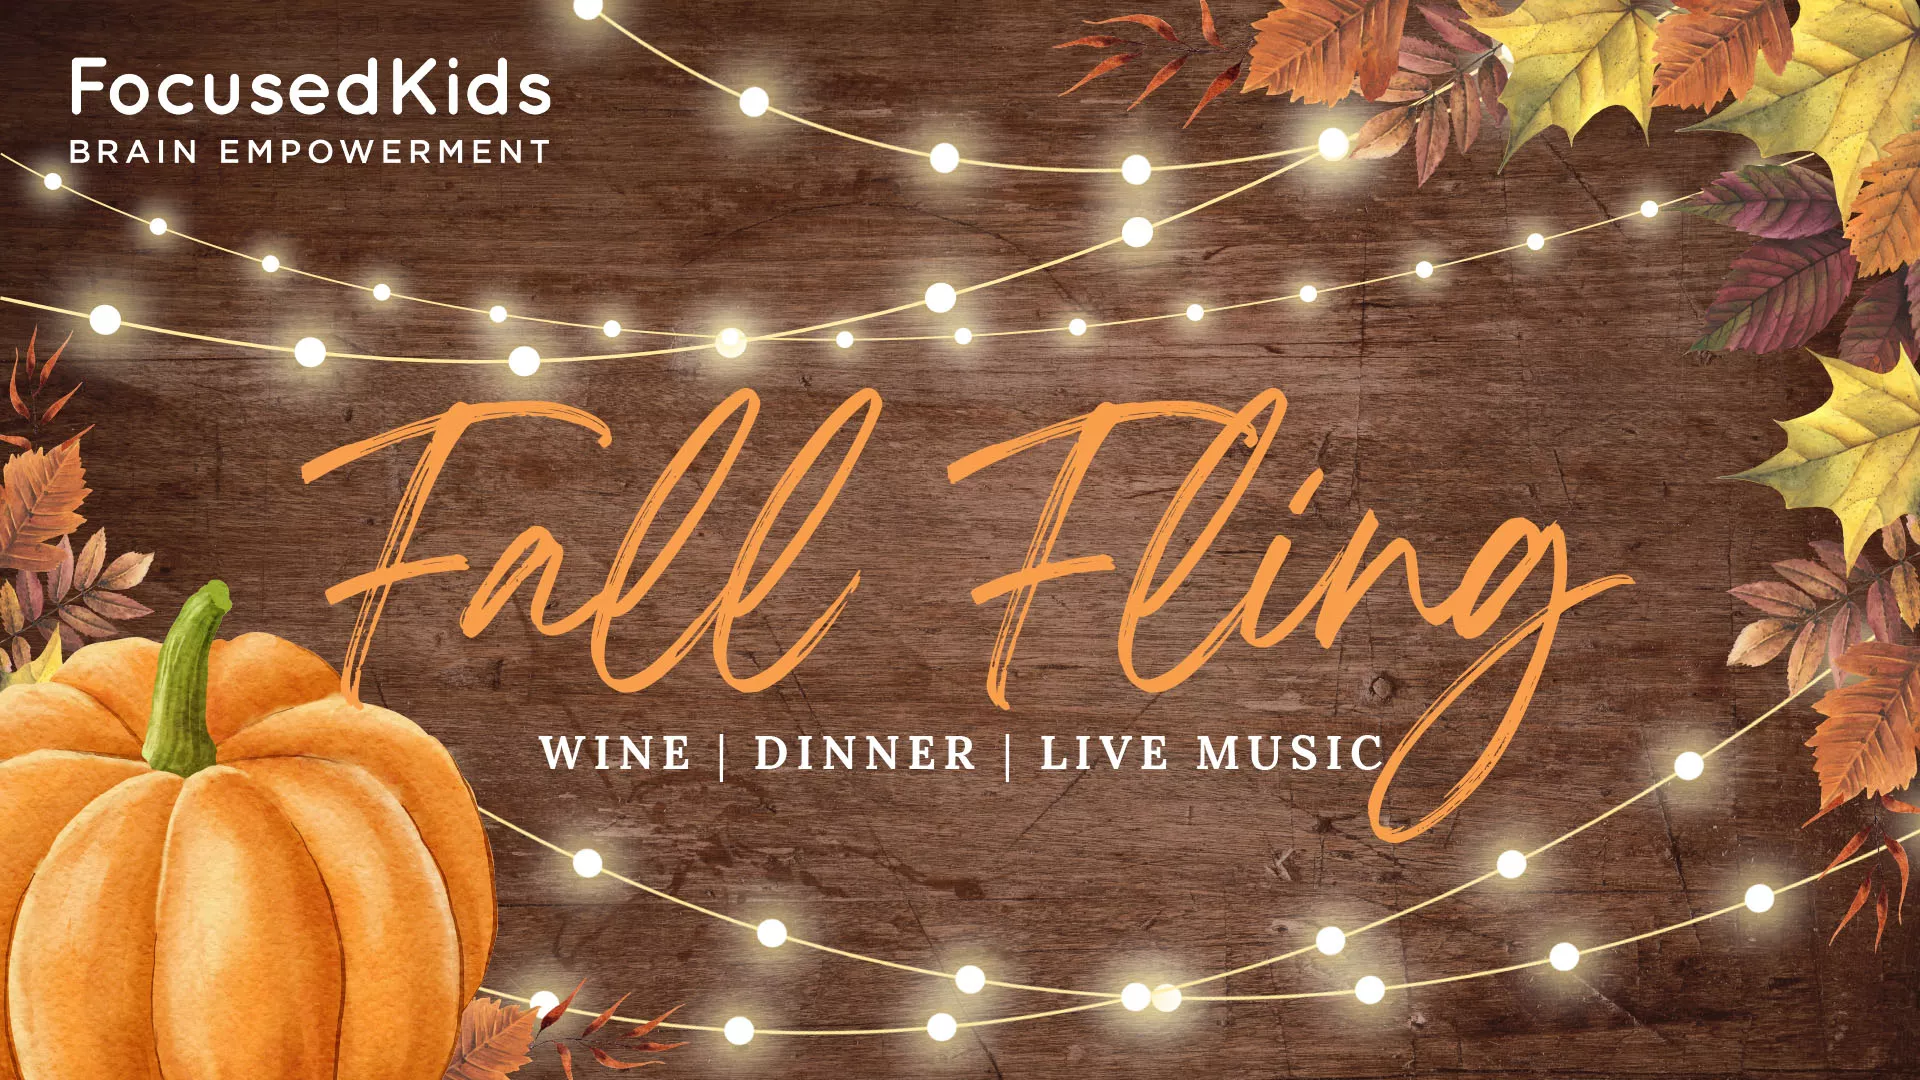 FocusedKids Fall Fling: Wine, Dinner, Live Music